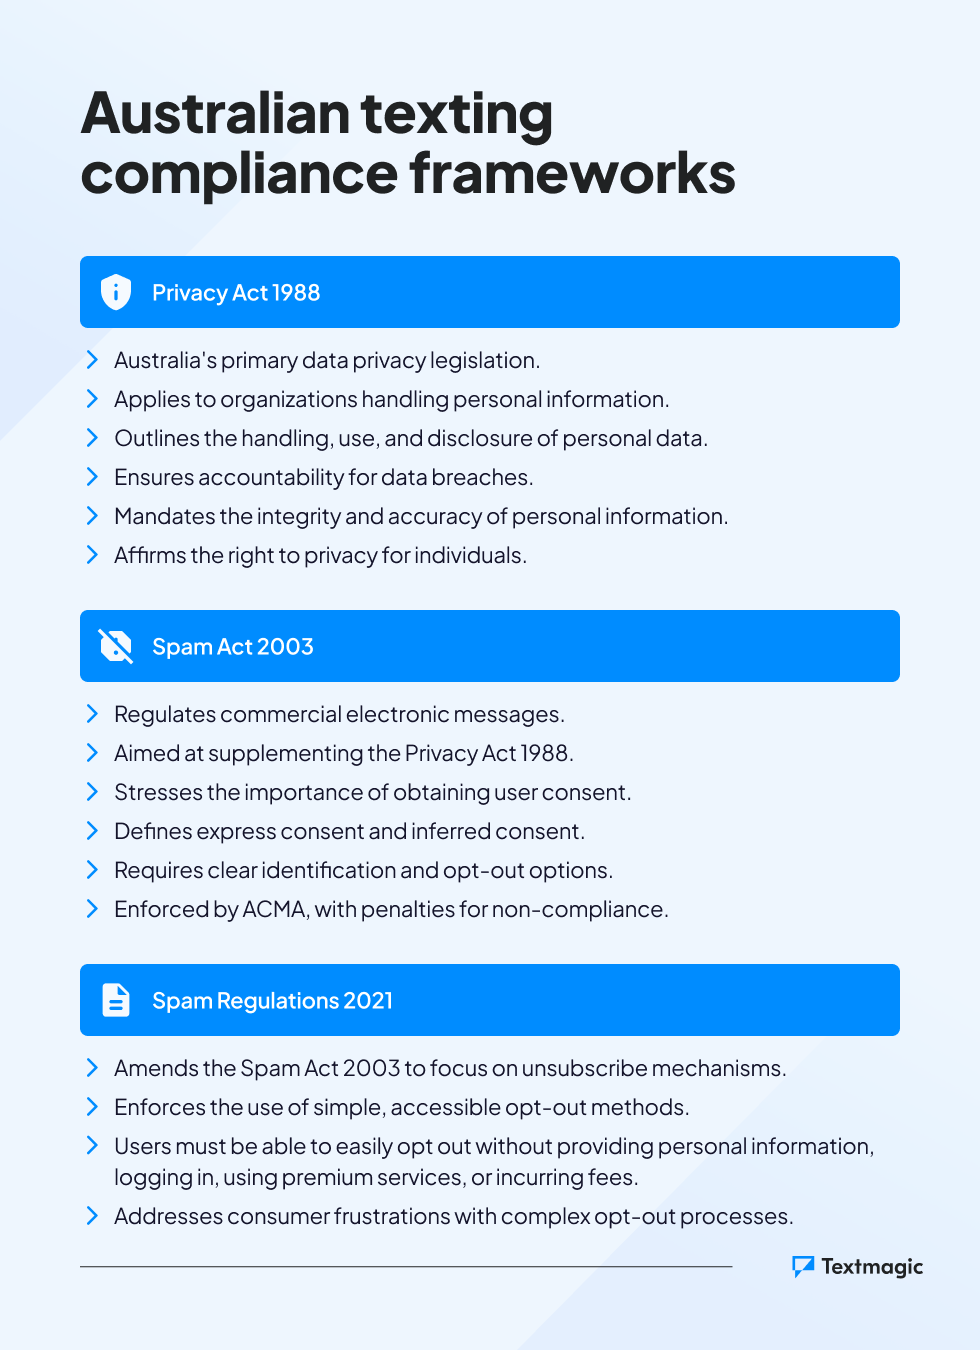 Key takeaways from the main compliance frameworks in Australia SMS marketing